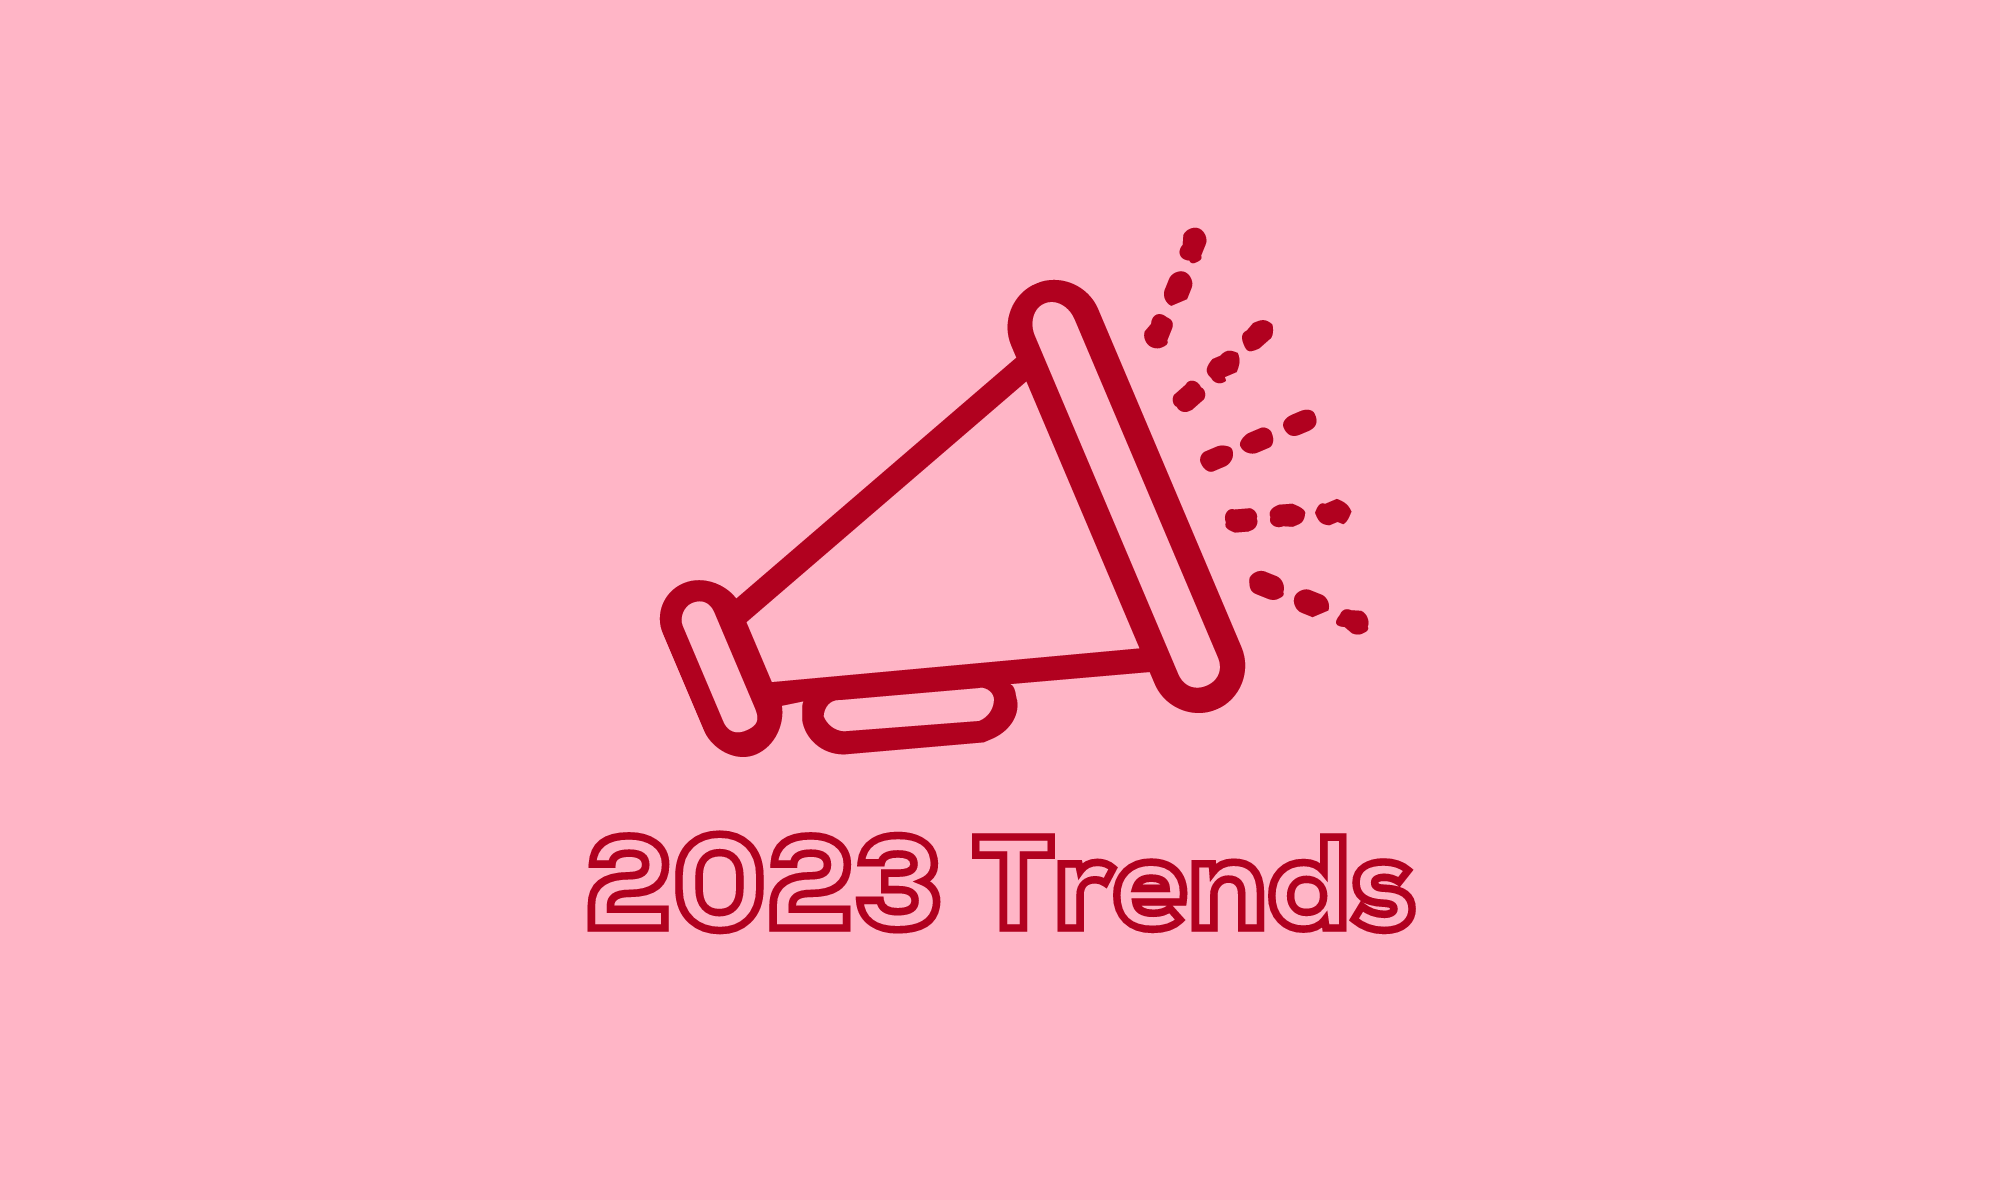 Top Digital Marketing Trends in 2023